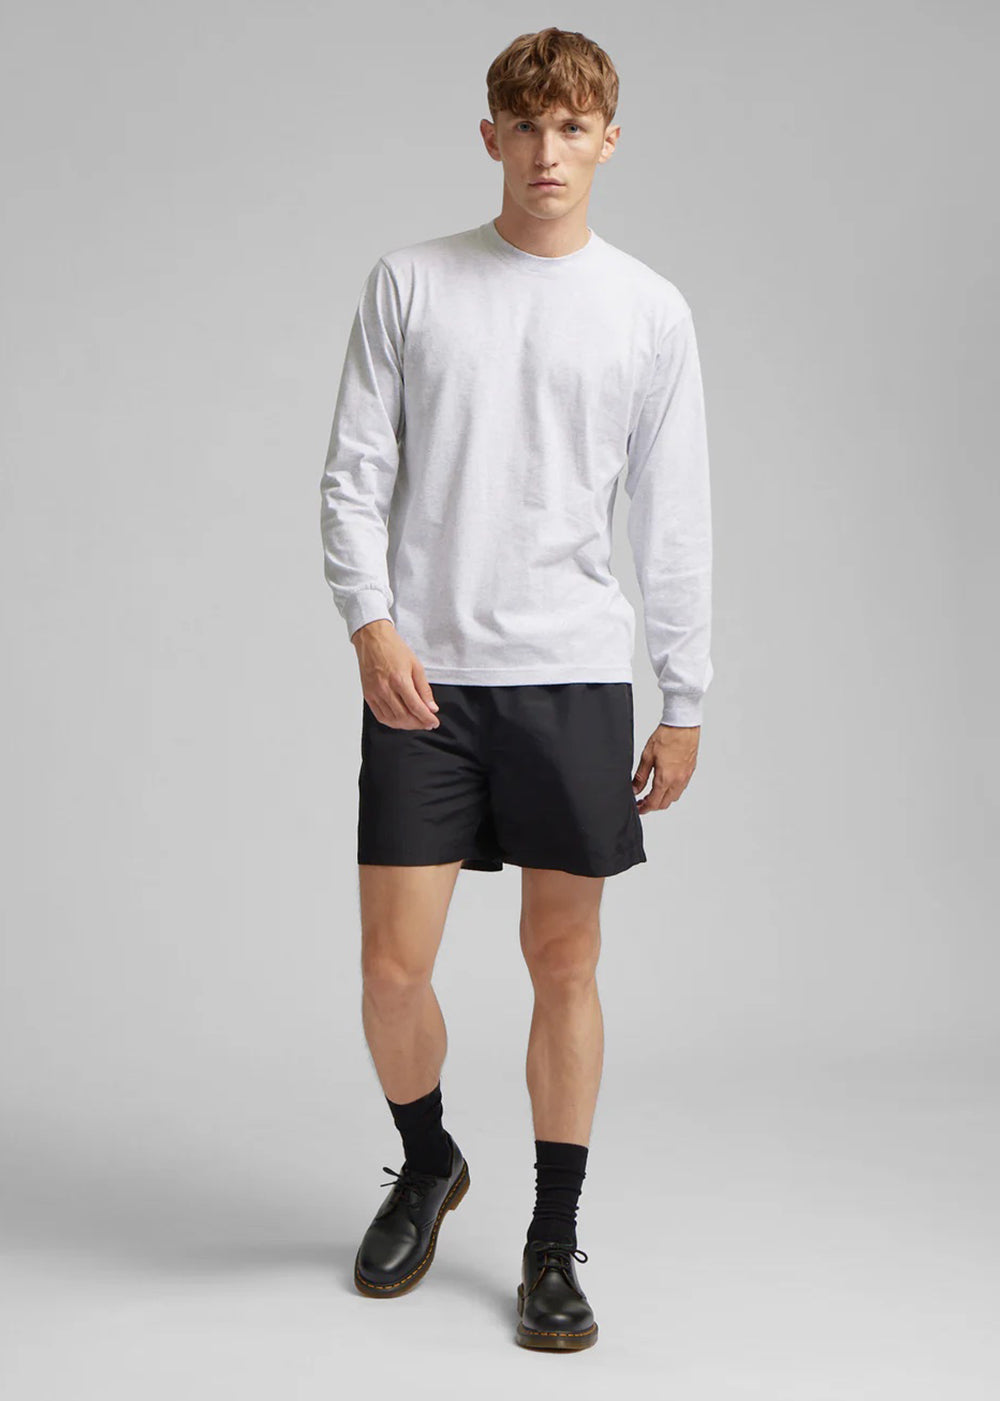 Oversized Organic LS T-Shirt - Optical White - Colorful Standard Canada - Danali